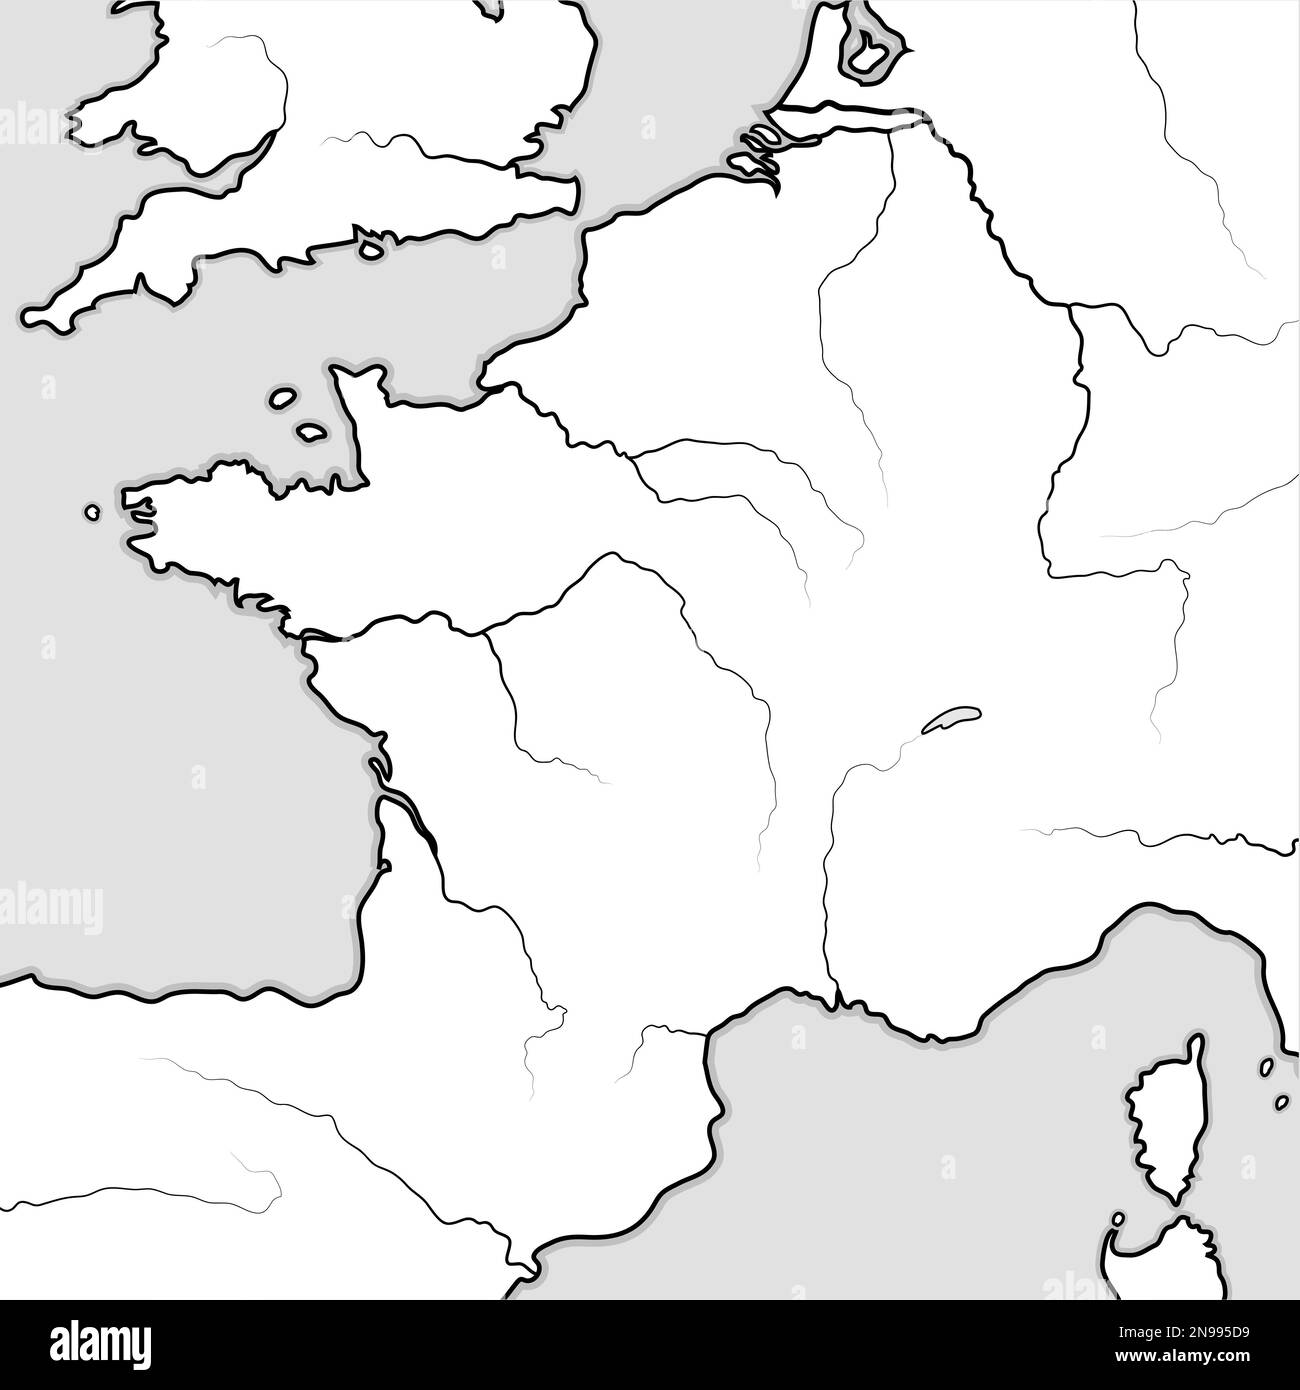 Map of The FRENCH Lands: France & its regions â€” Ile-de-France, Champagne, Normandie, Bretagne, Aquitaine, Occitanie, Provence, Burgundy, Lorraine Stock Photo